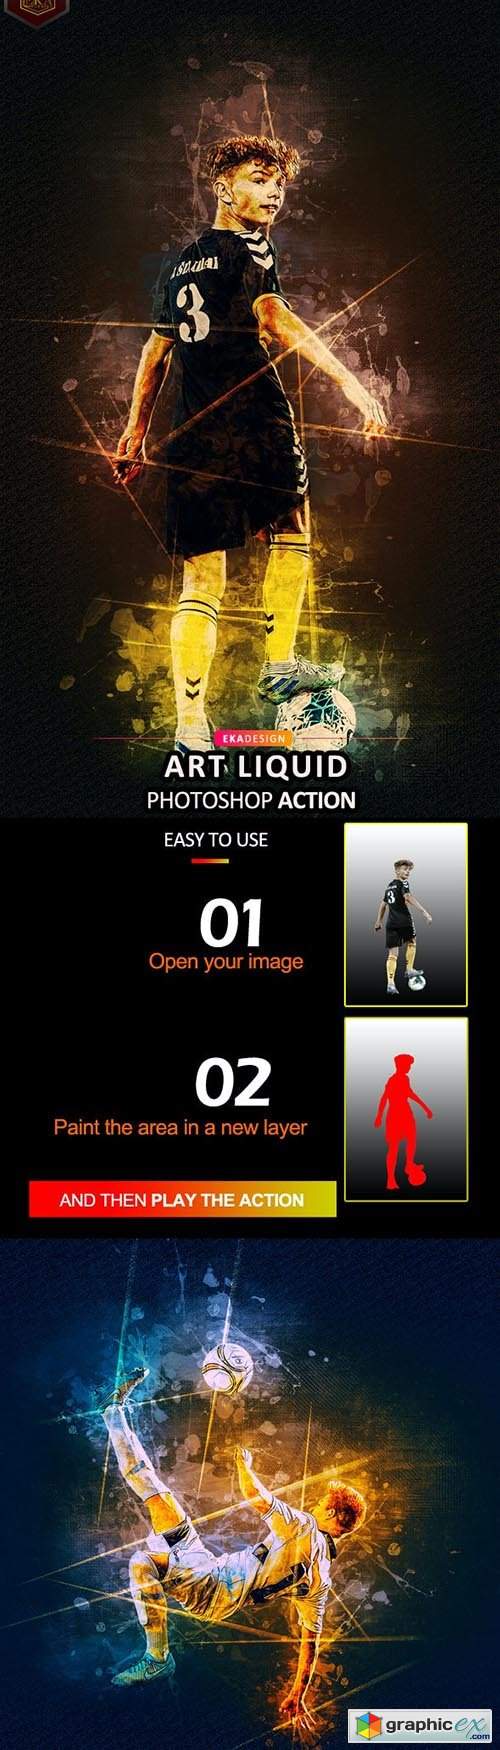  Art Liquid Photoshop Action 